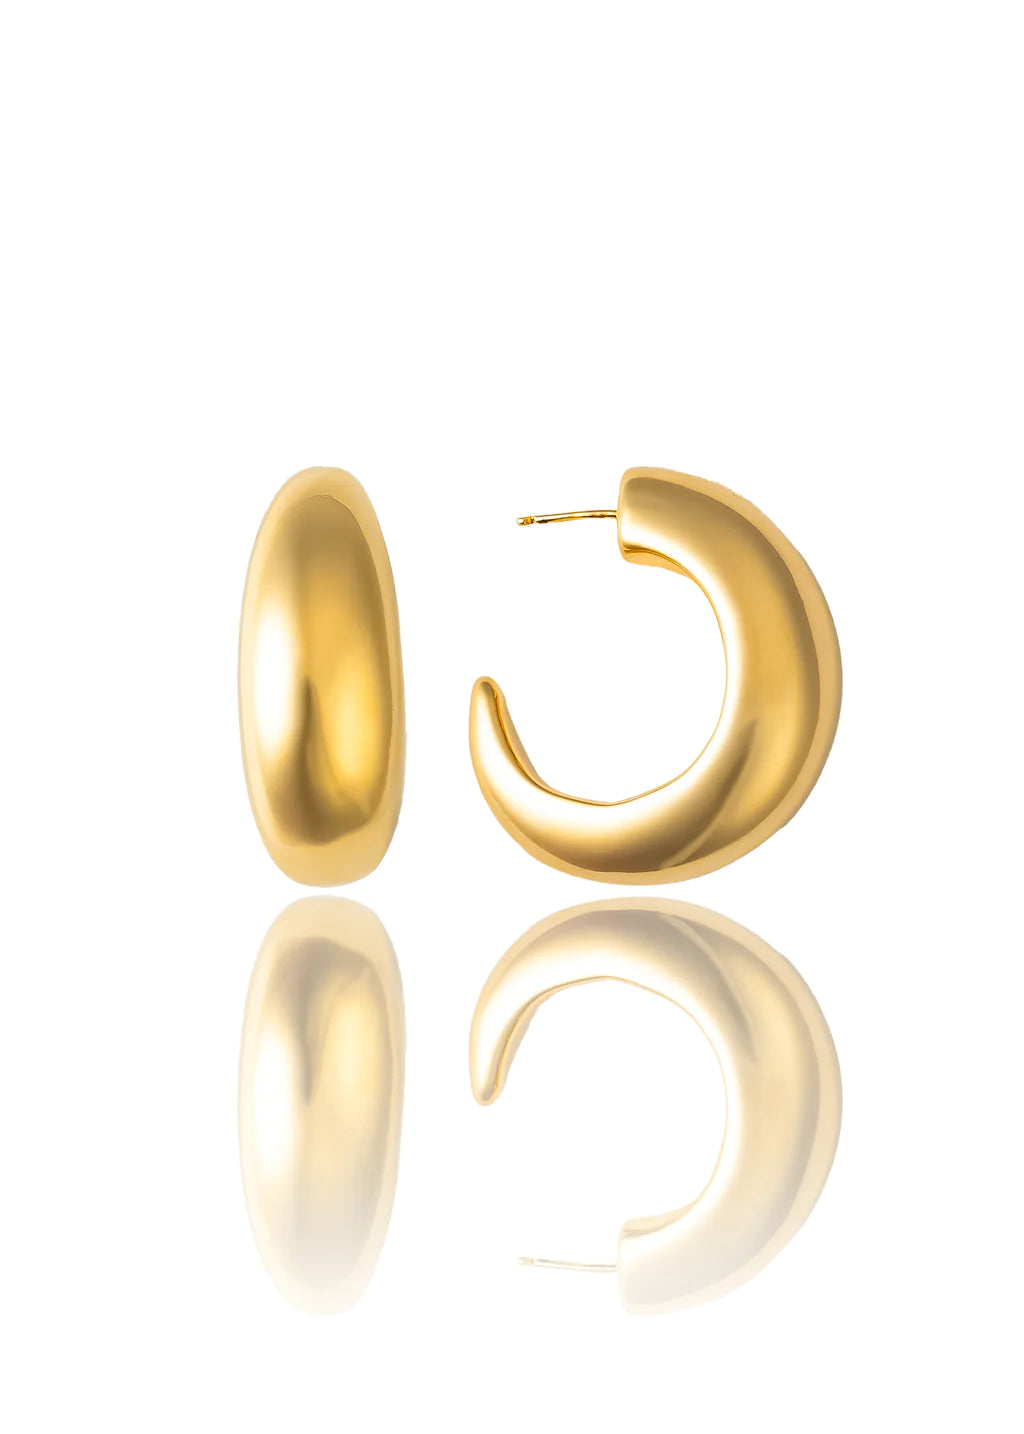 XL Crescent Moon Earrings In 18K Yellow Gold